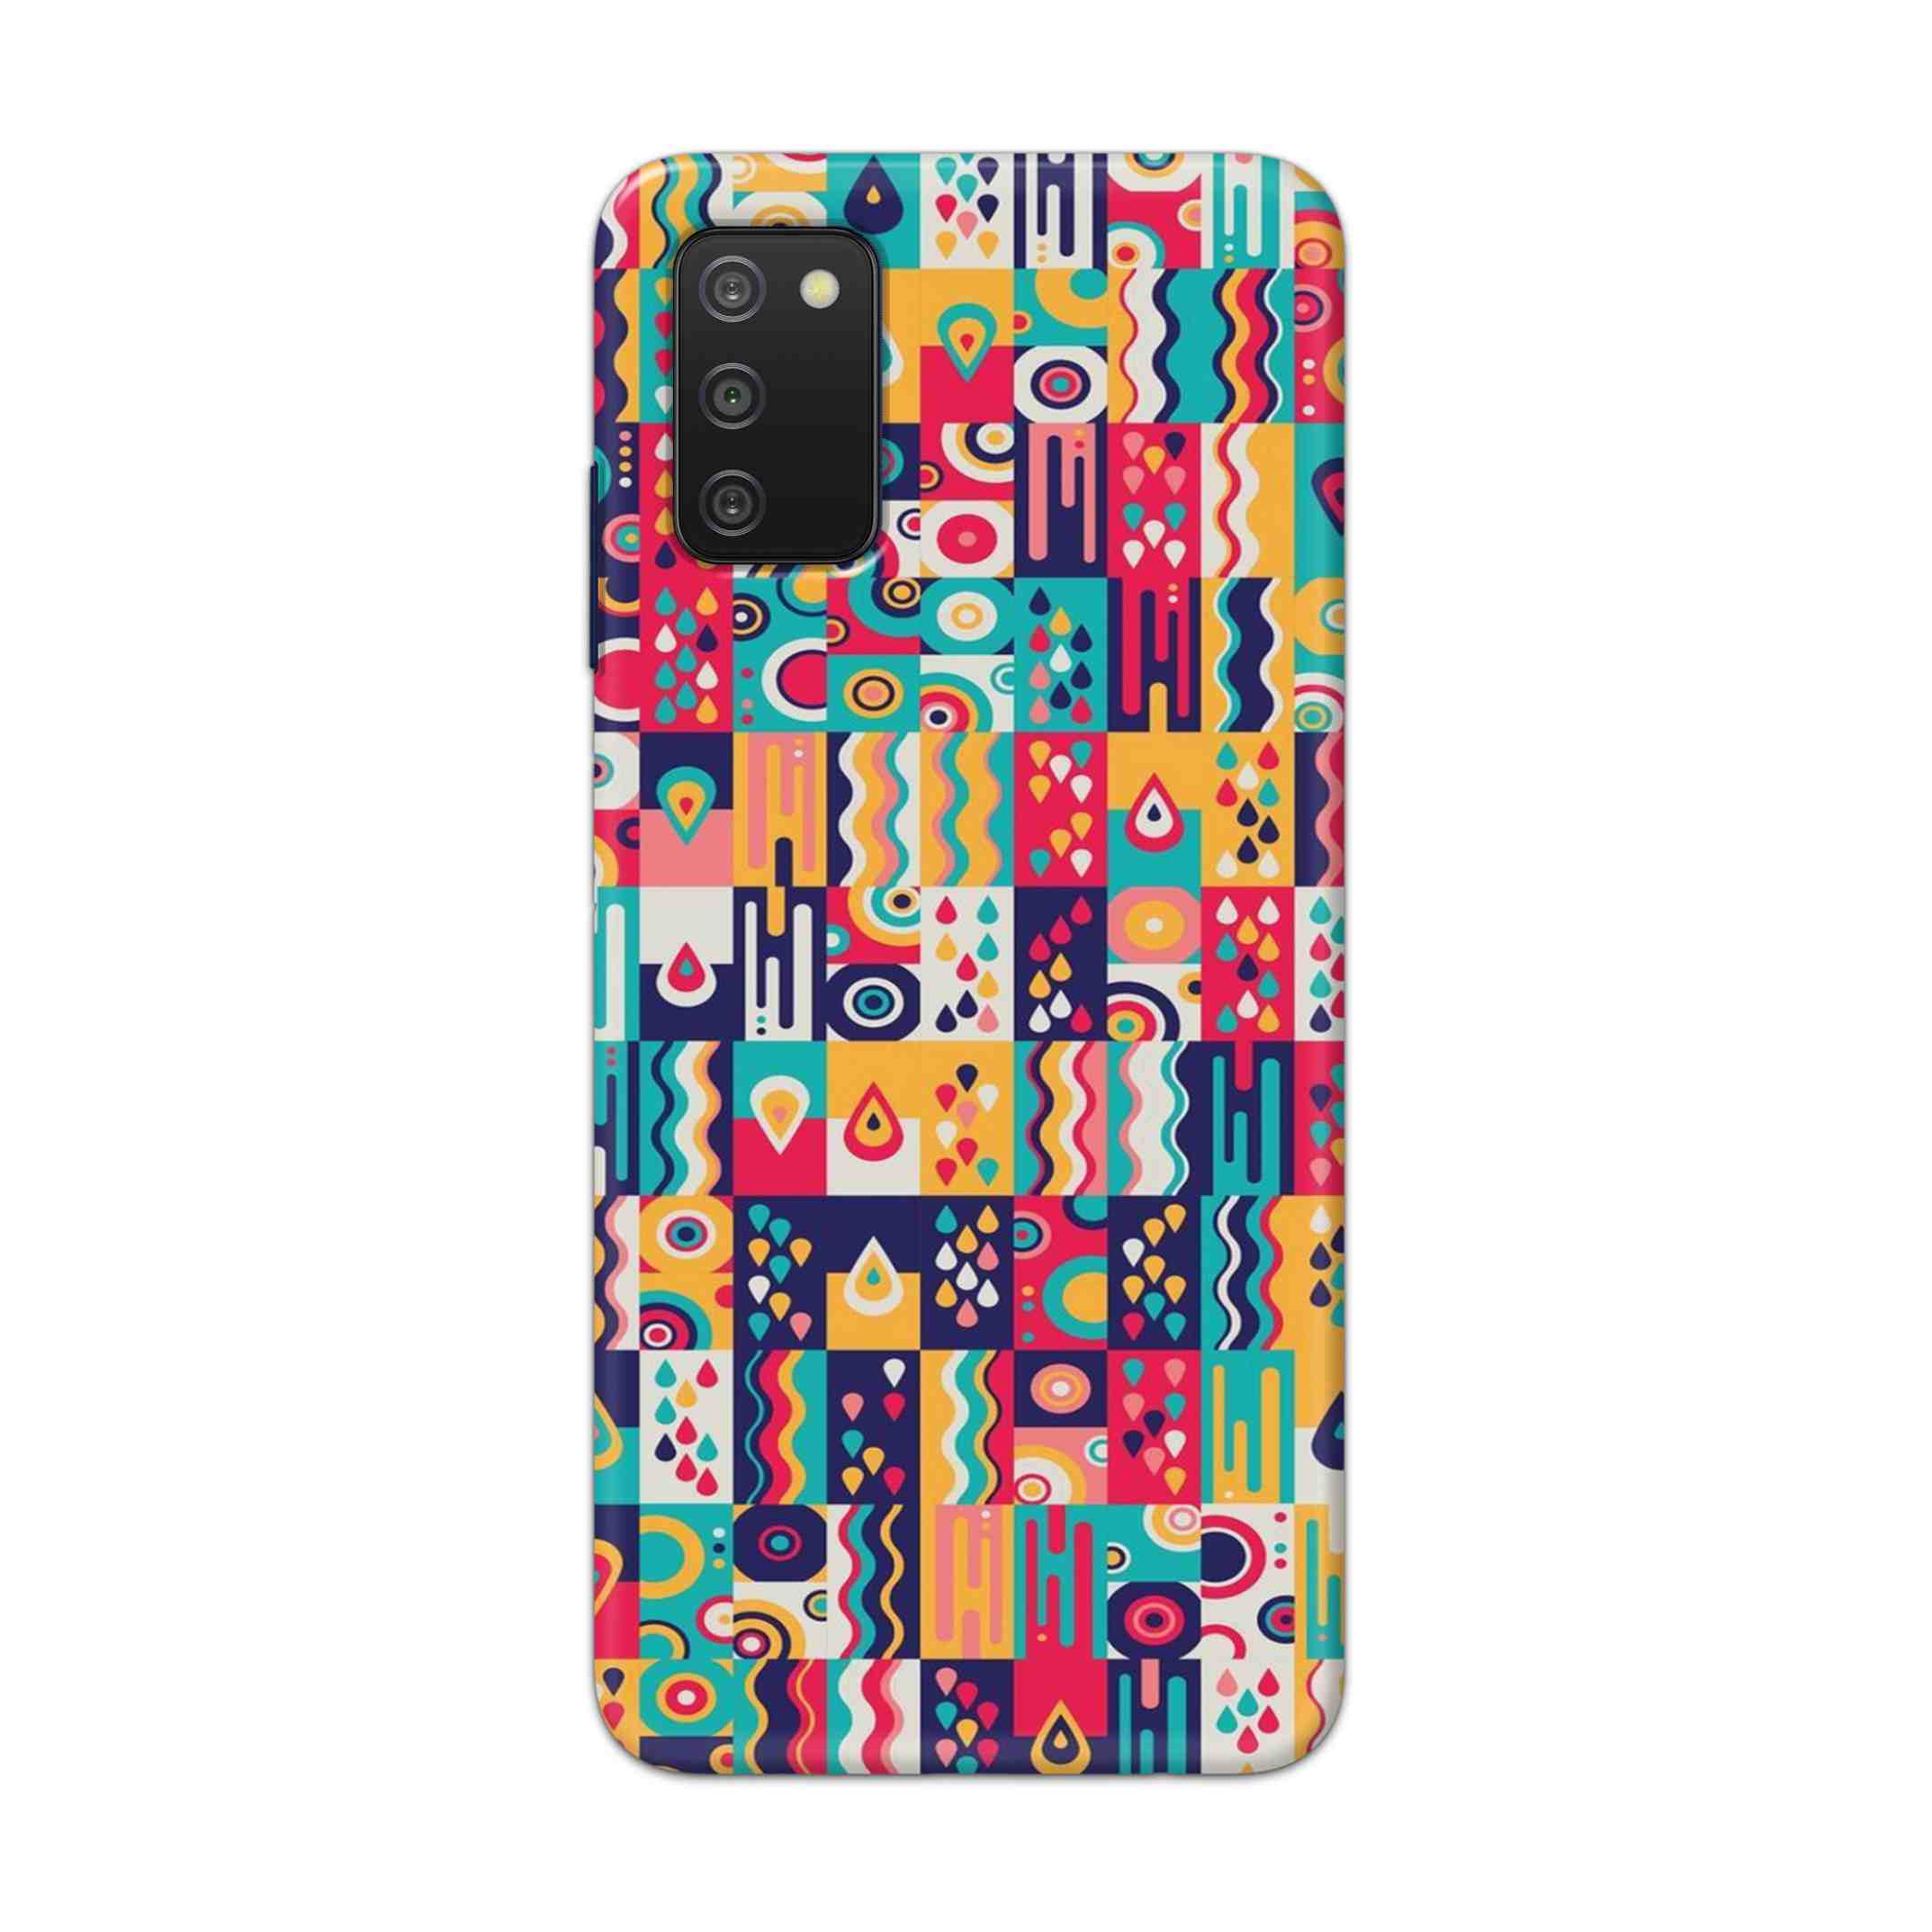 Buy Art Hard Back Mobile Phone Case Cover For Samsung A03s Online